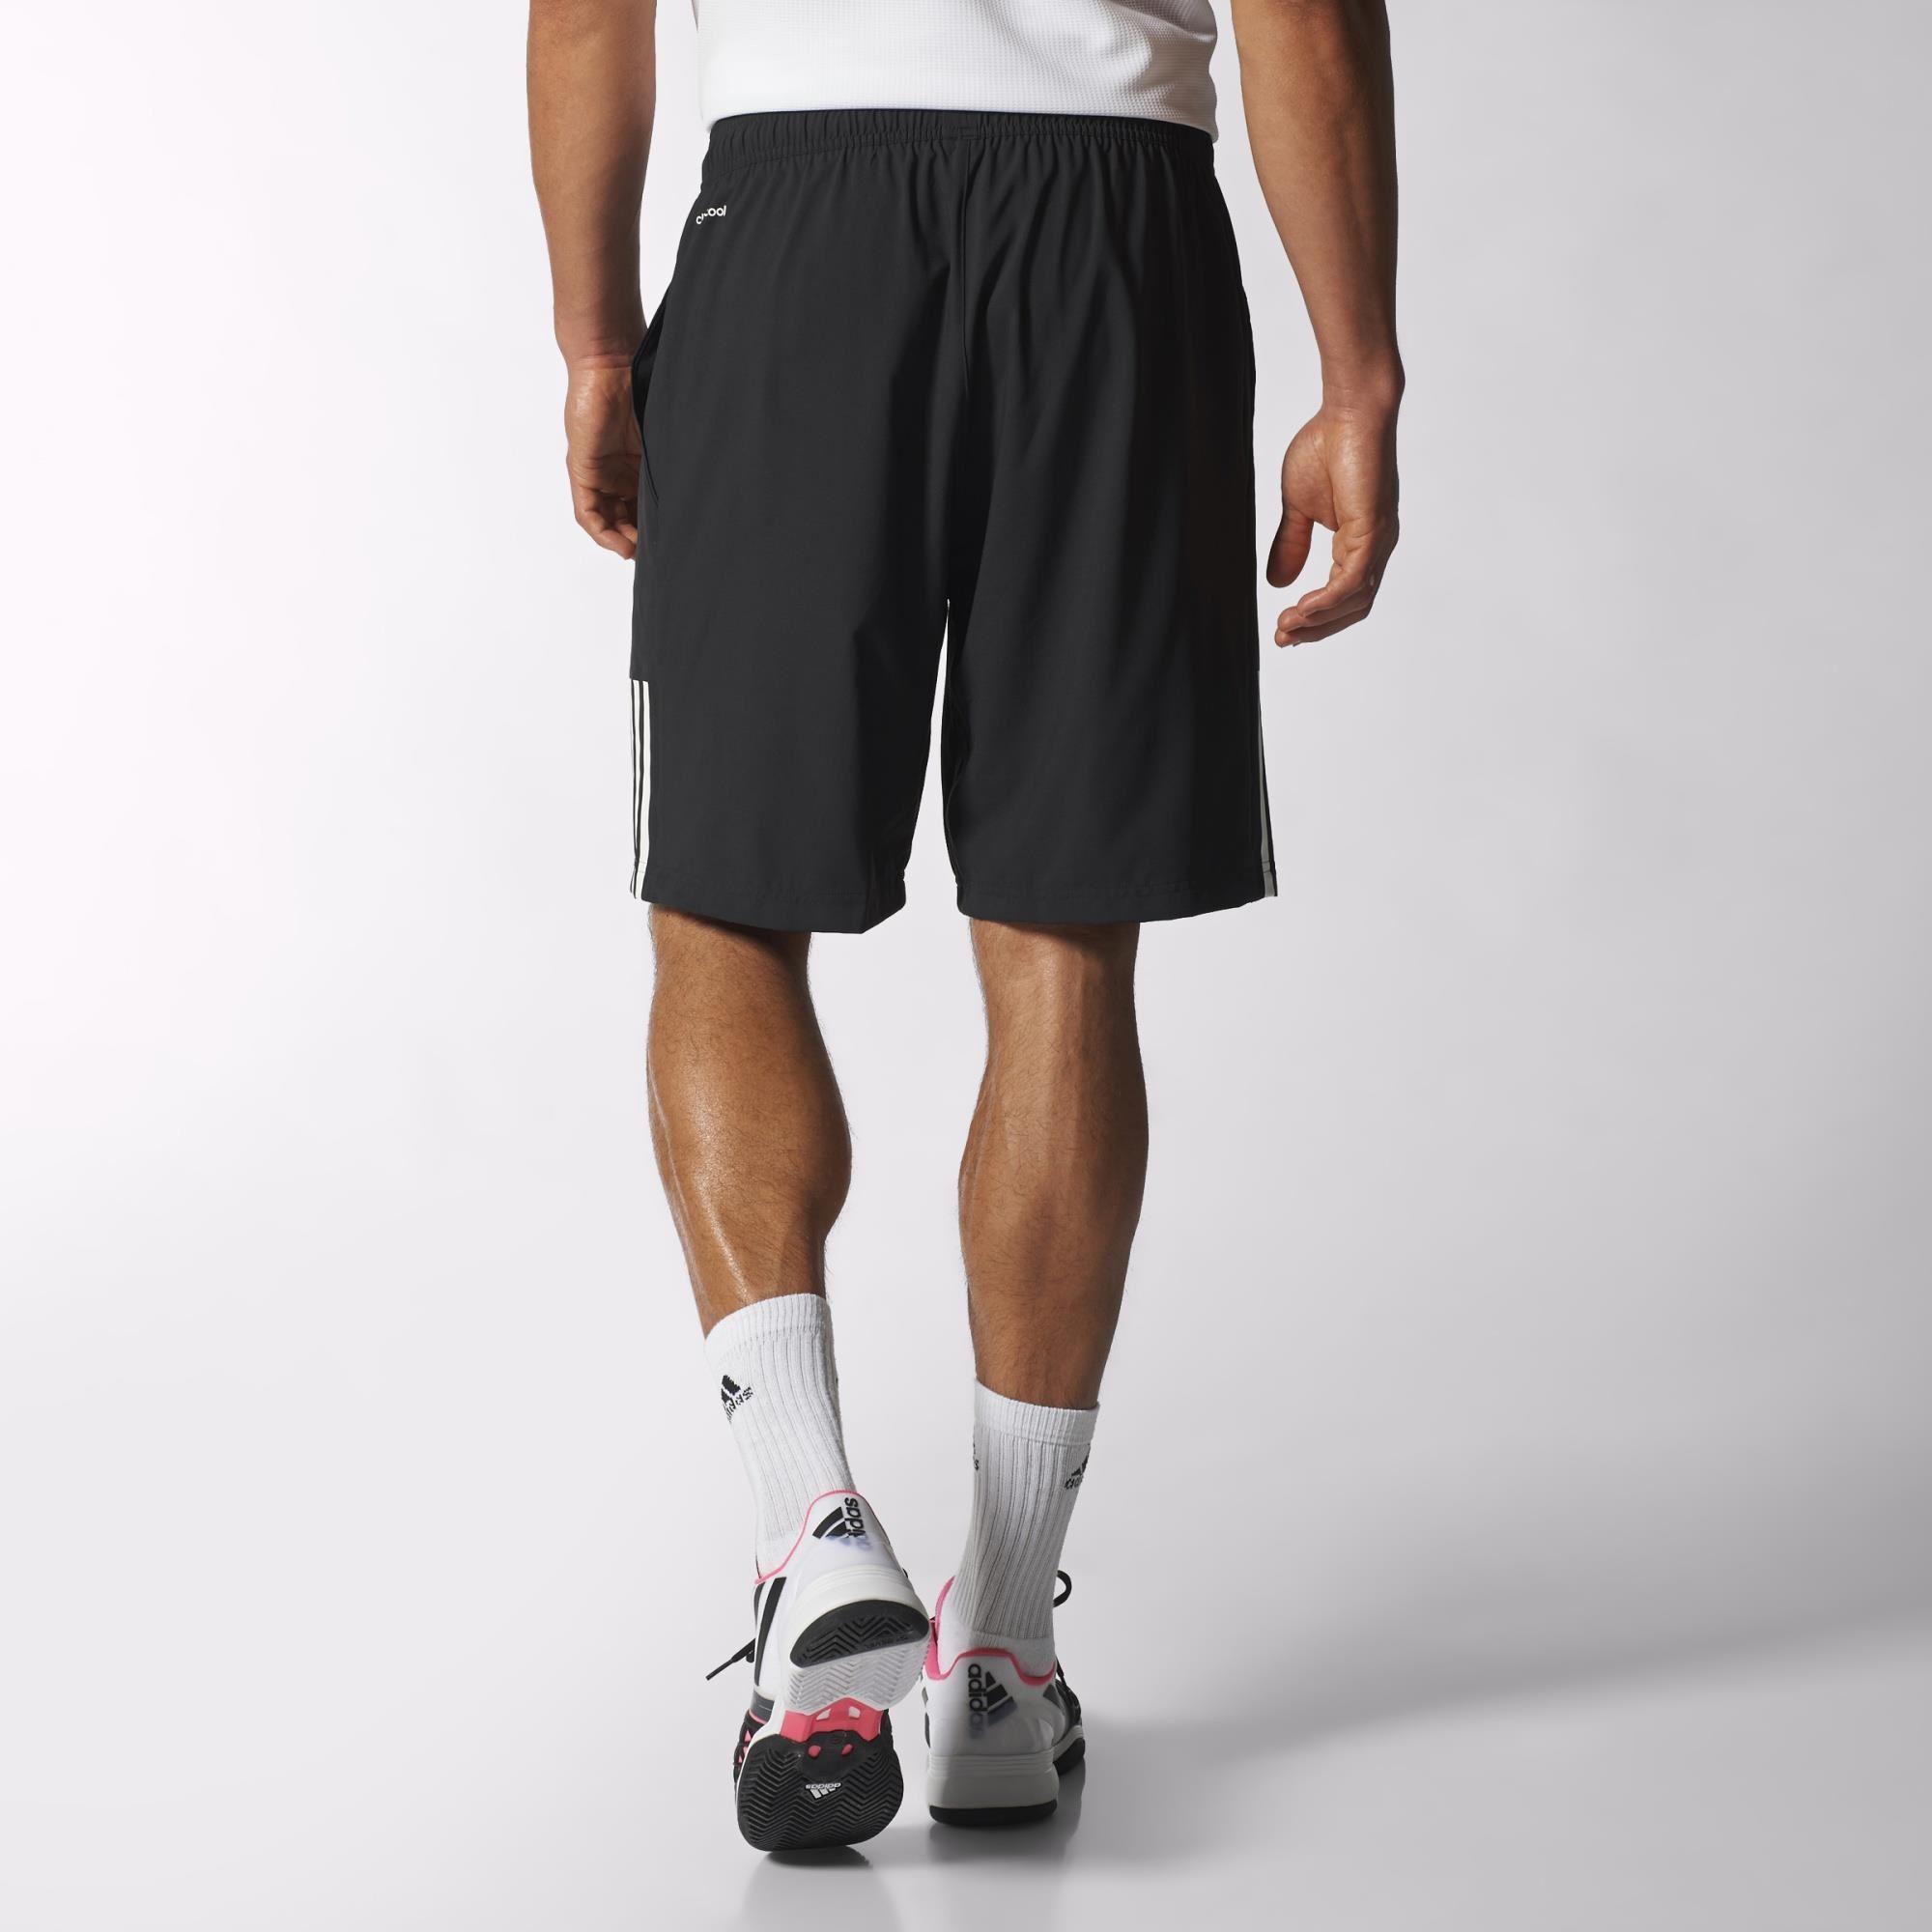 Adidas Mens Response Shorts - Black - Tennisnuts.com